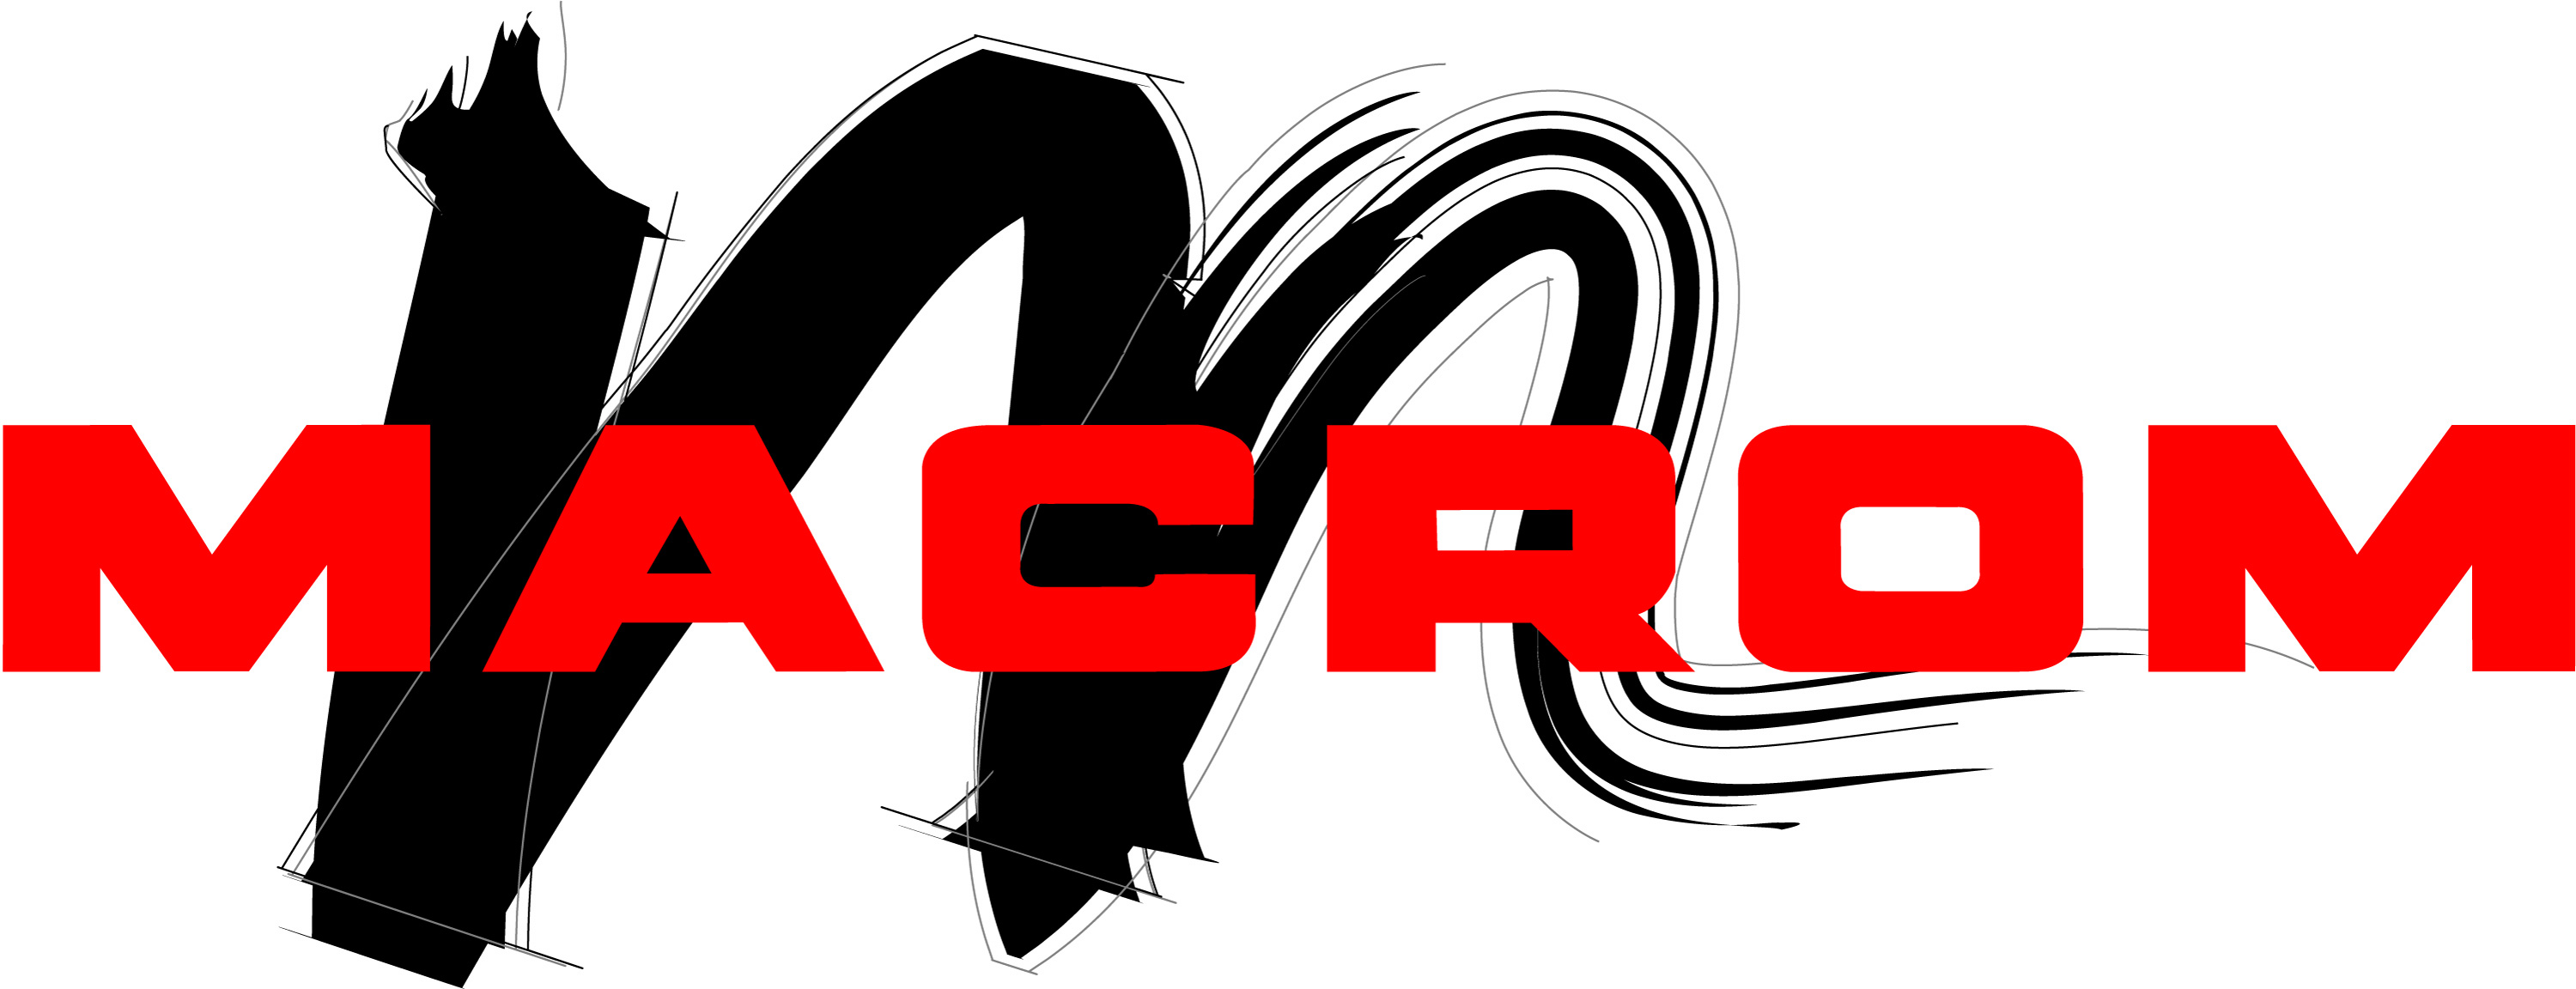 macrom Logo photo - 1